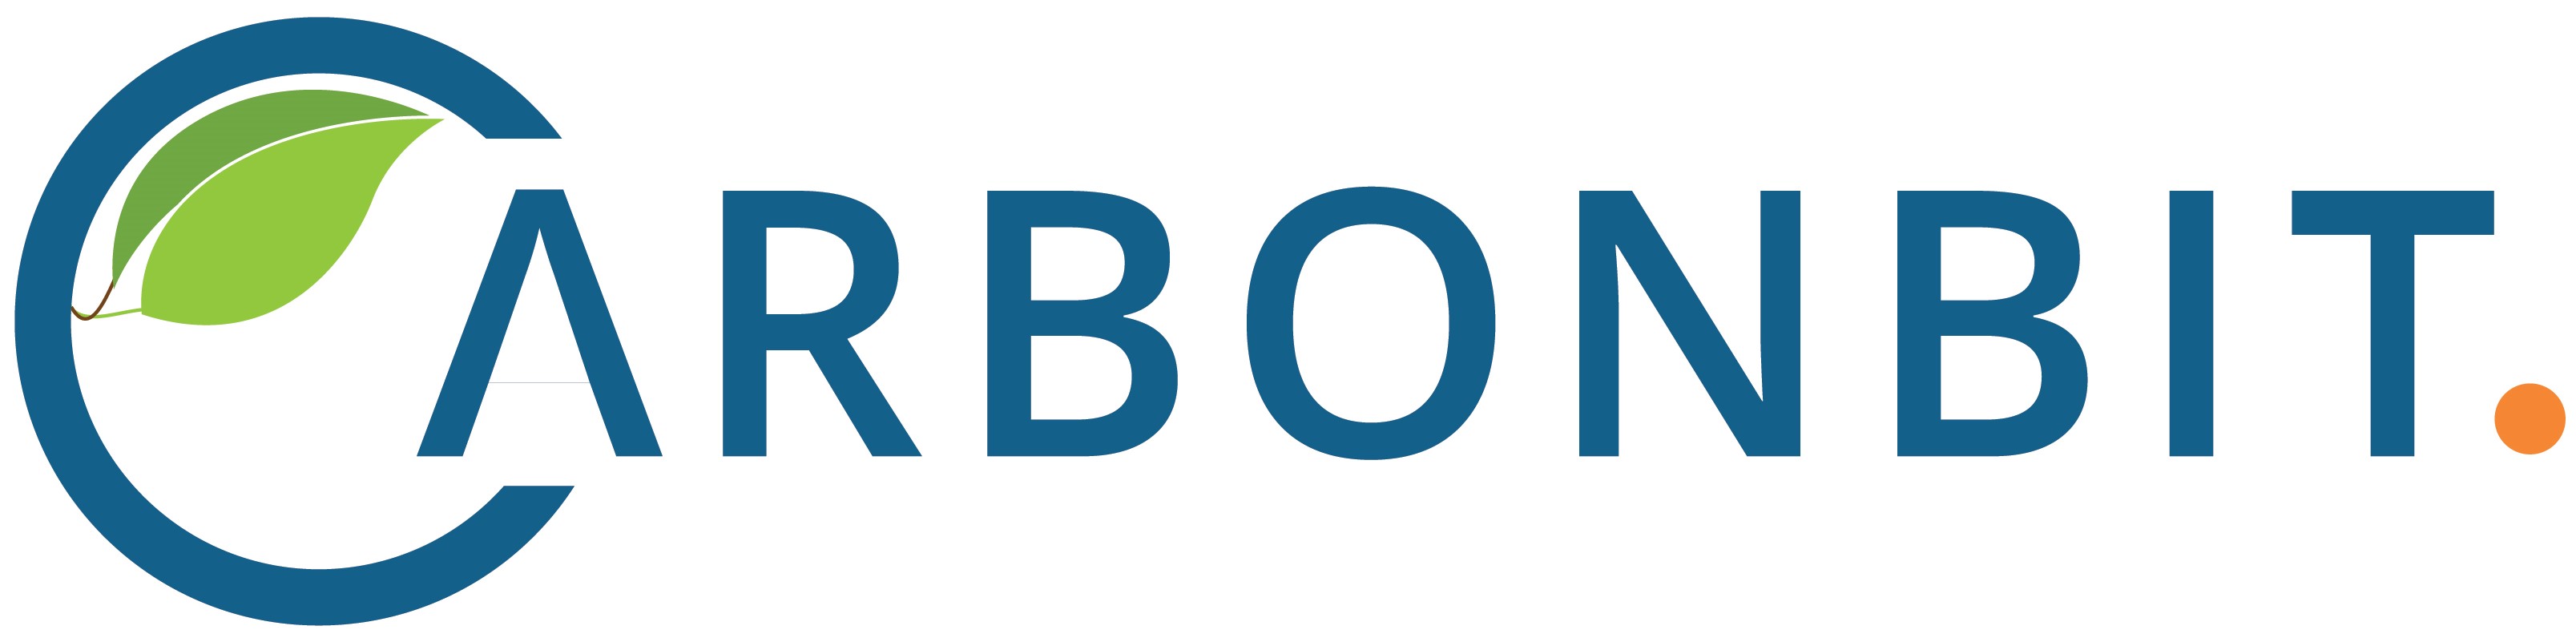 logo for Carbonbit